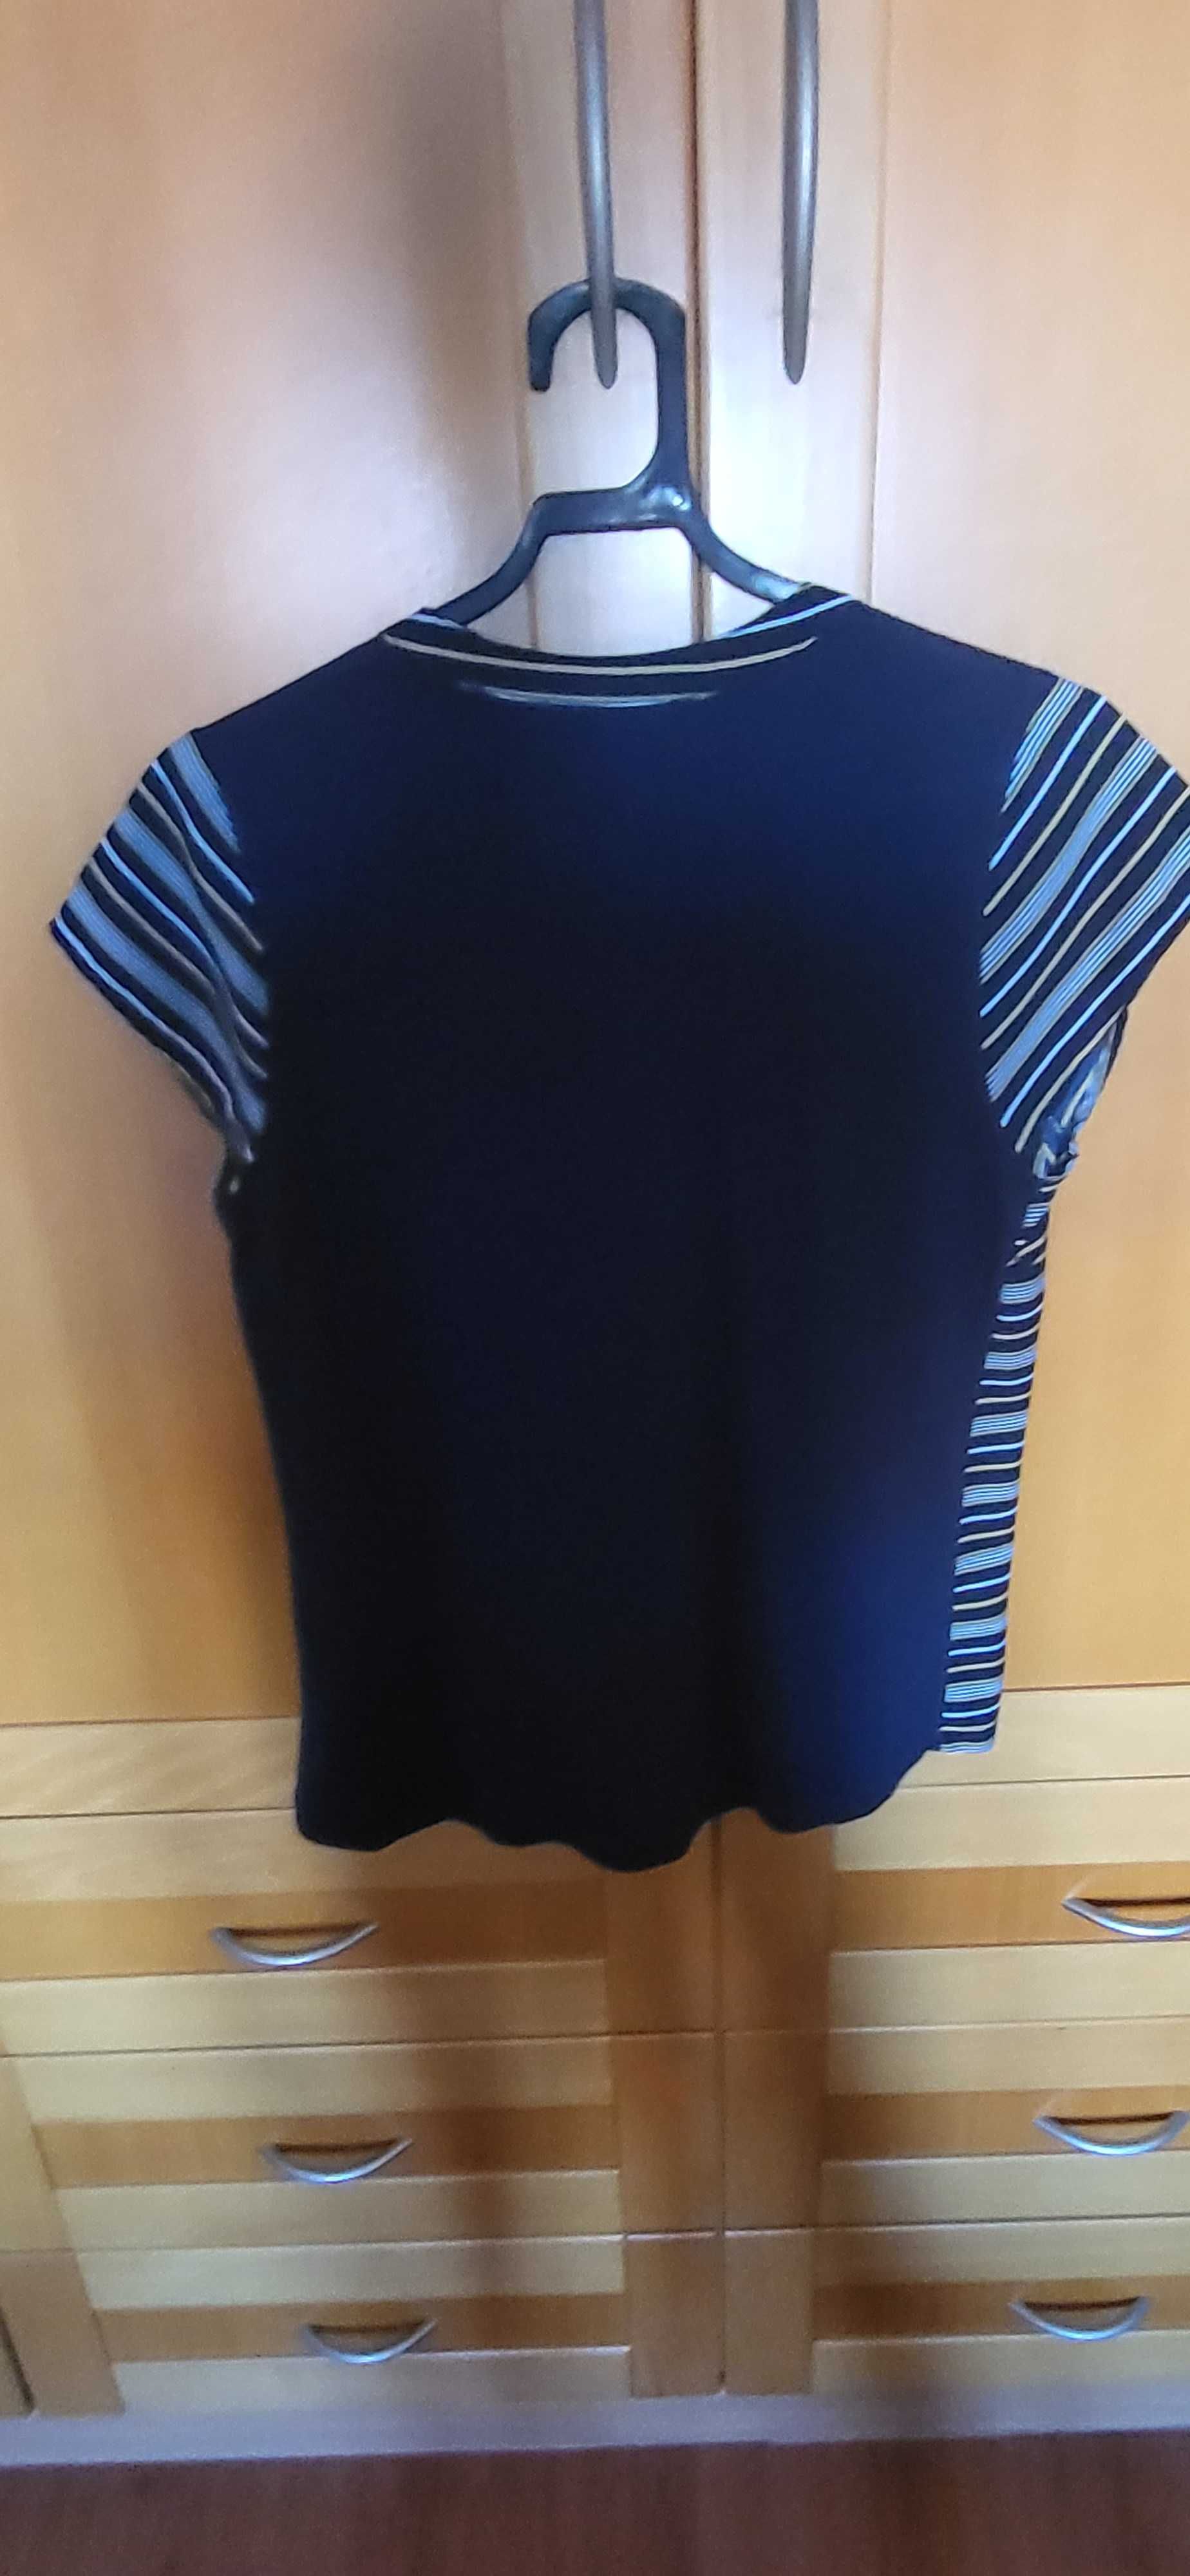 Camisa azul riscas meia manga Milano / camisa C&A coral manga acava